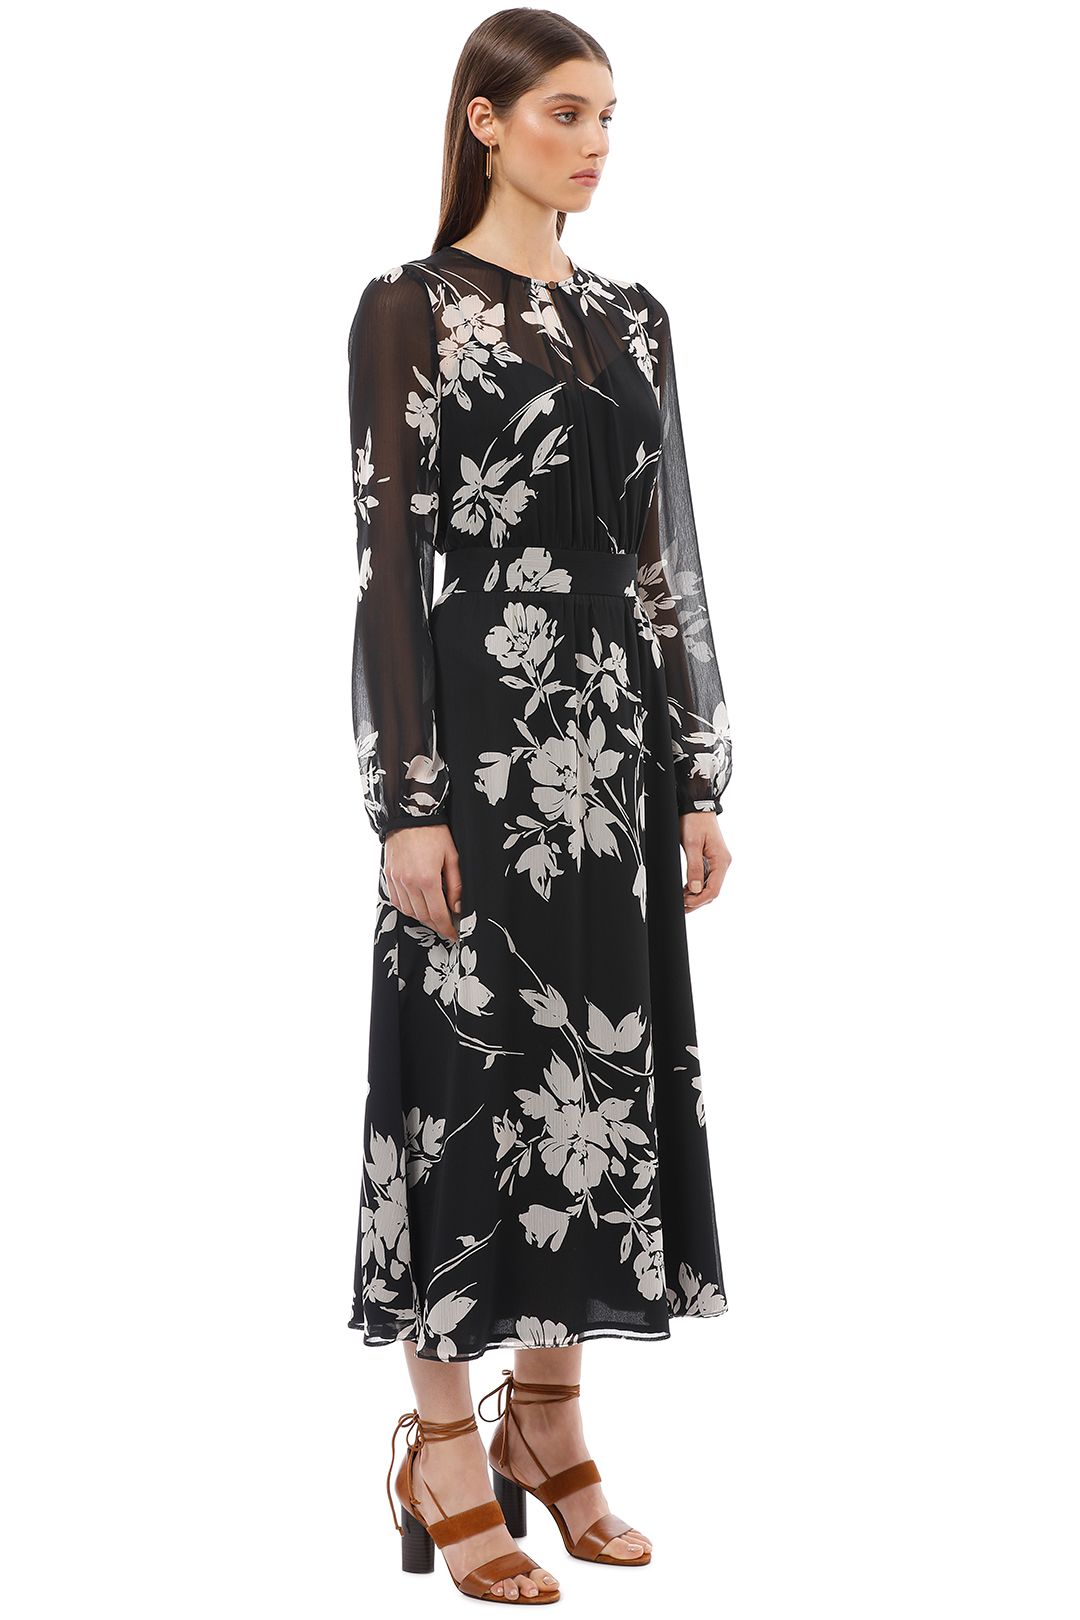 Cue - Monochrome Floral Midi Dress - Black - Side